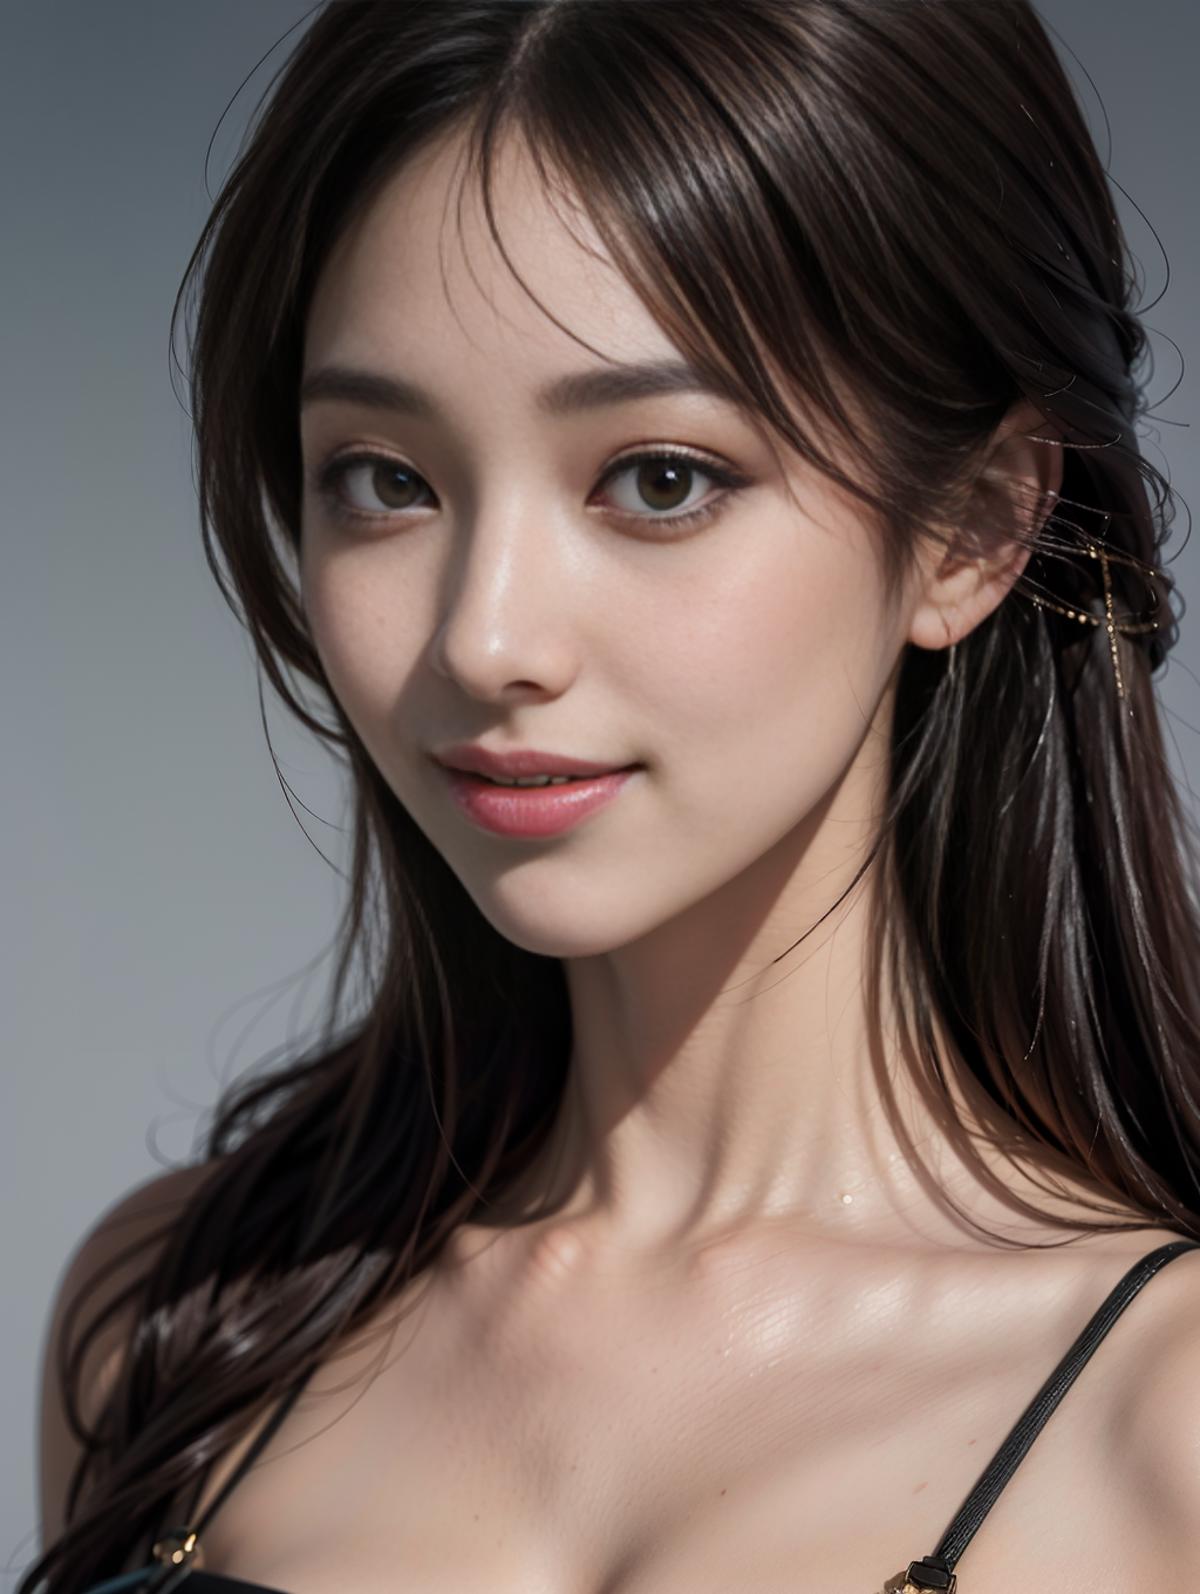 [2731] Asian Girls ( Pretty Asian Girls) image by _2731abc